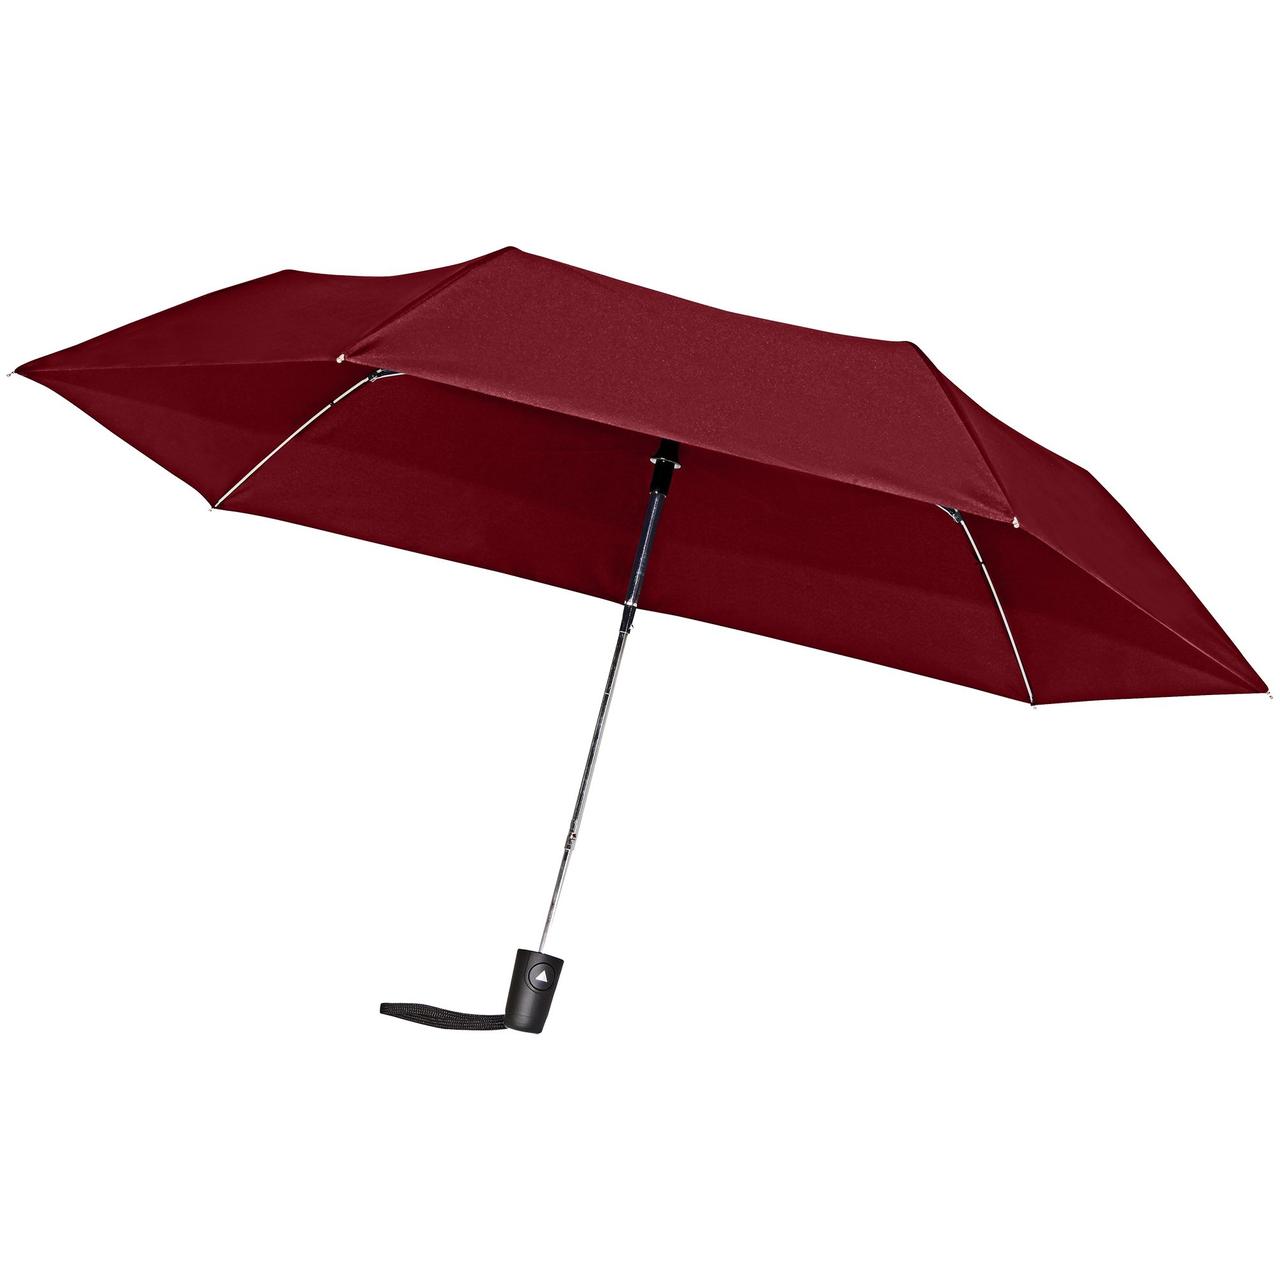 Зонт складной Hit Mini AC, бордовый (артикул 11842.55)